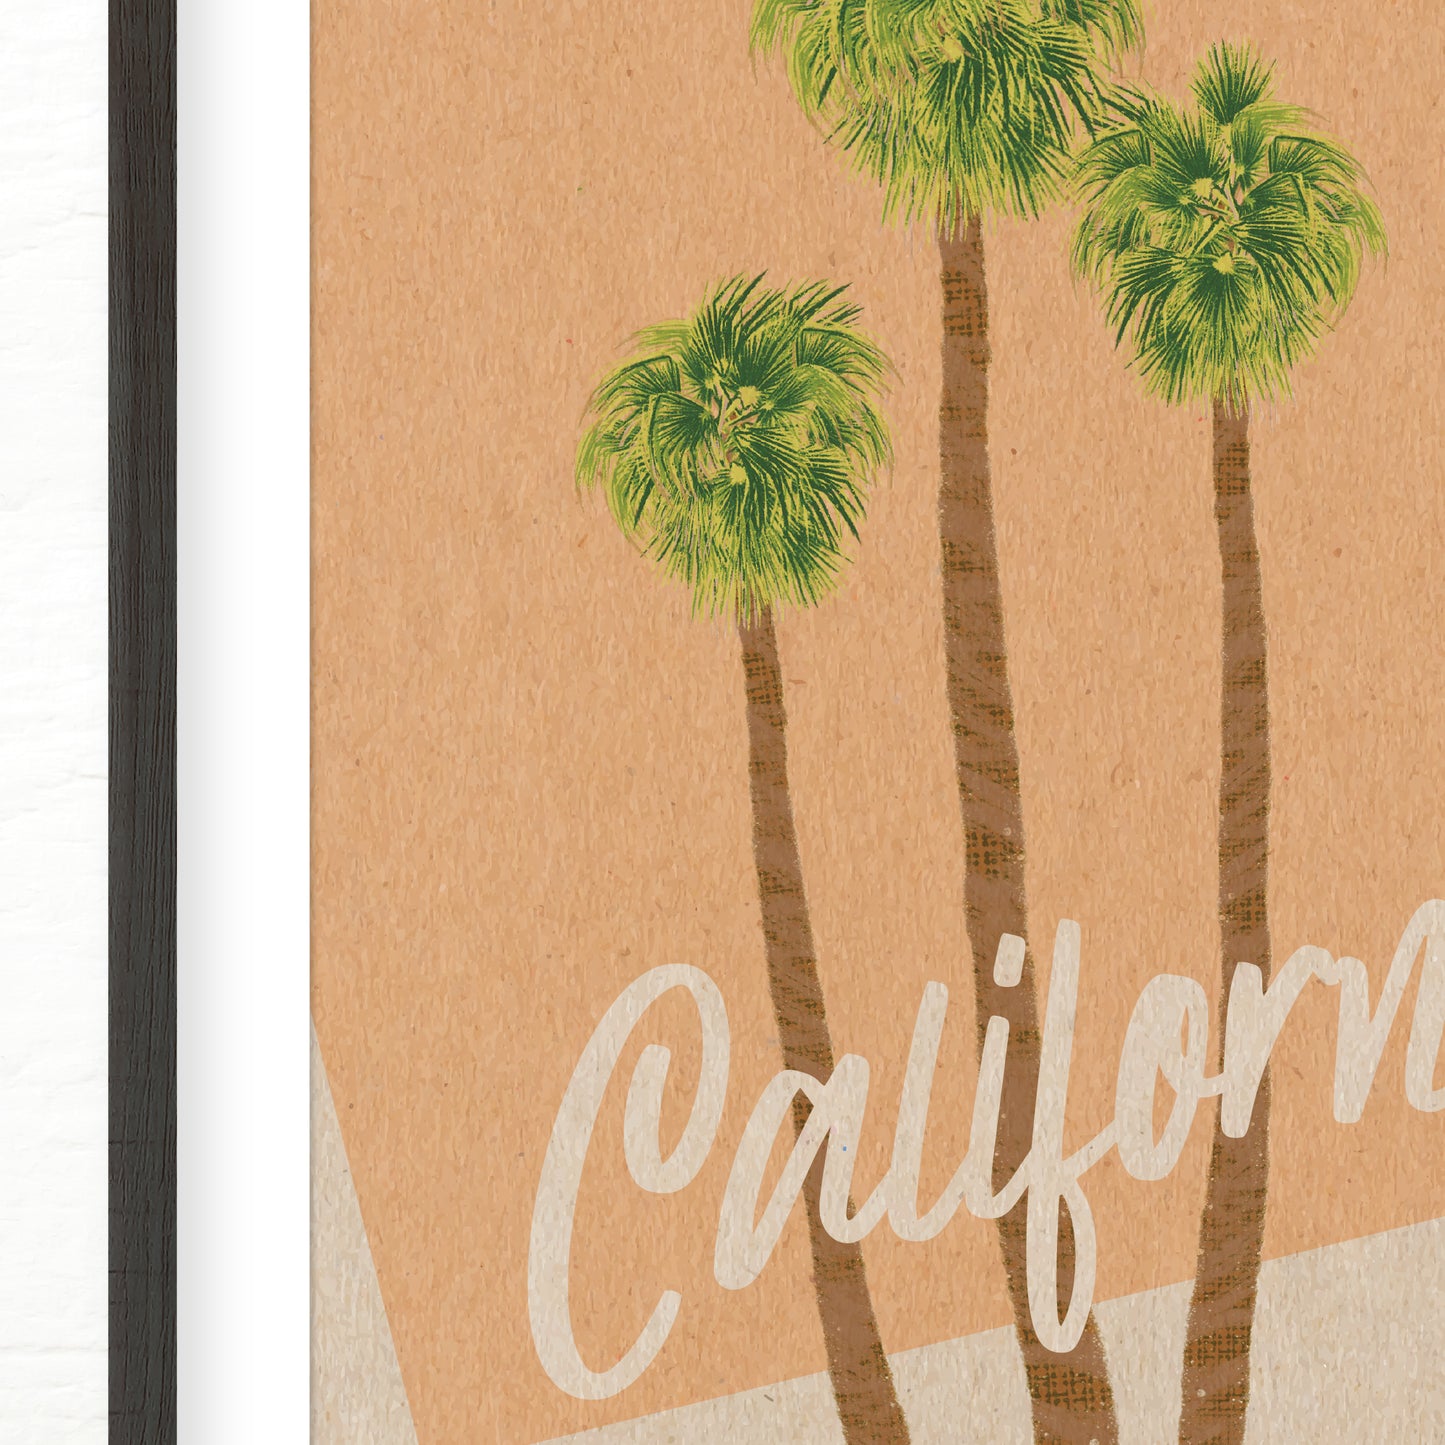 California Palm Trees Art Print